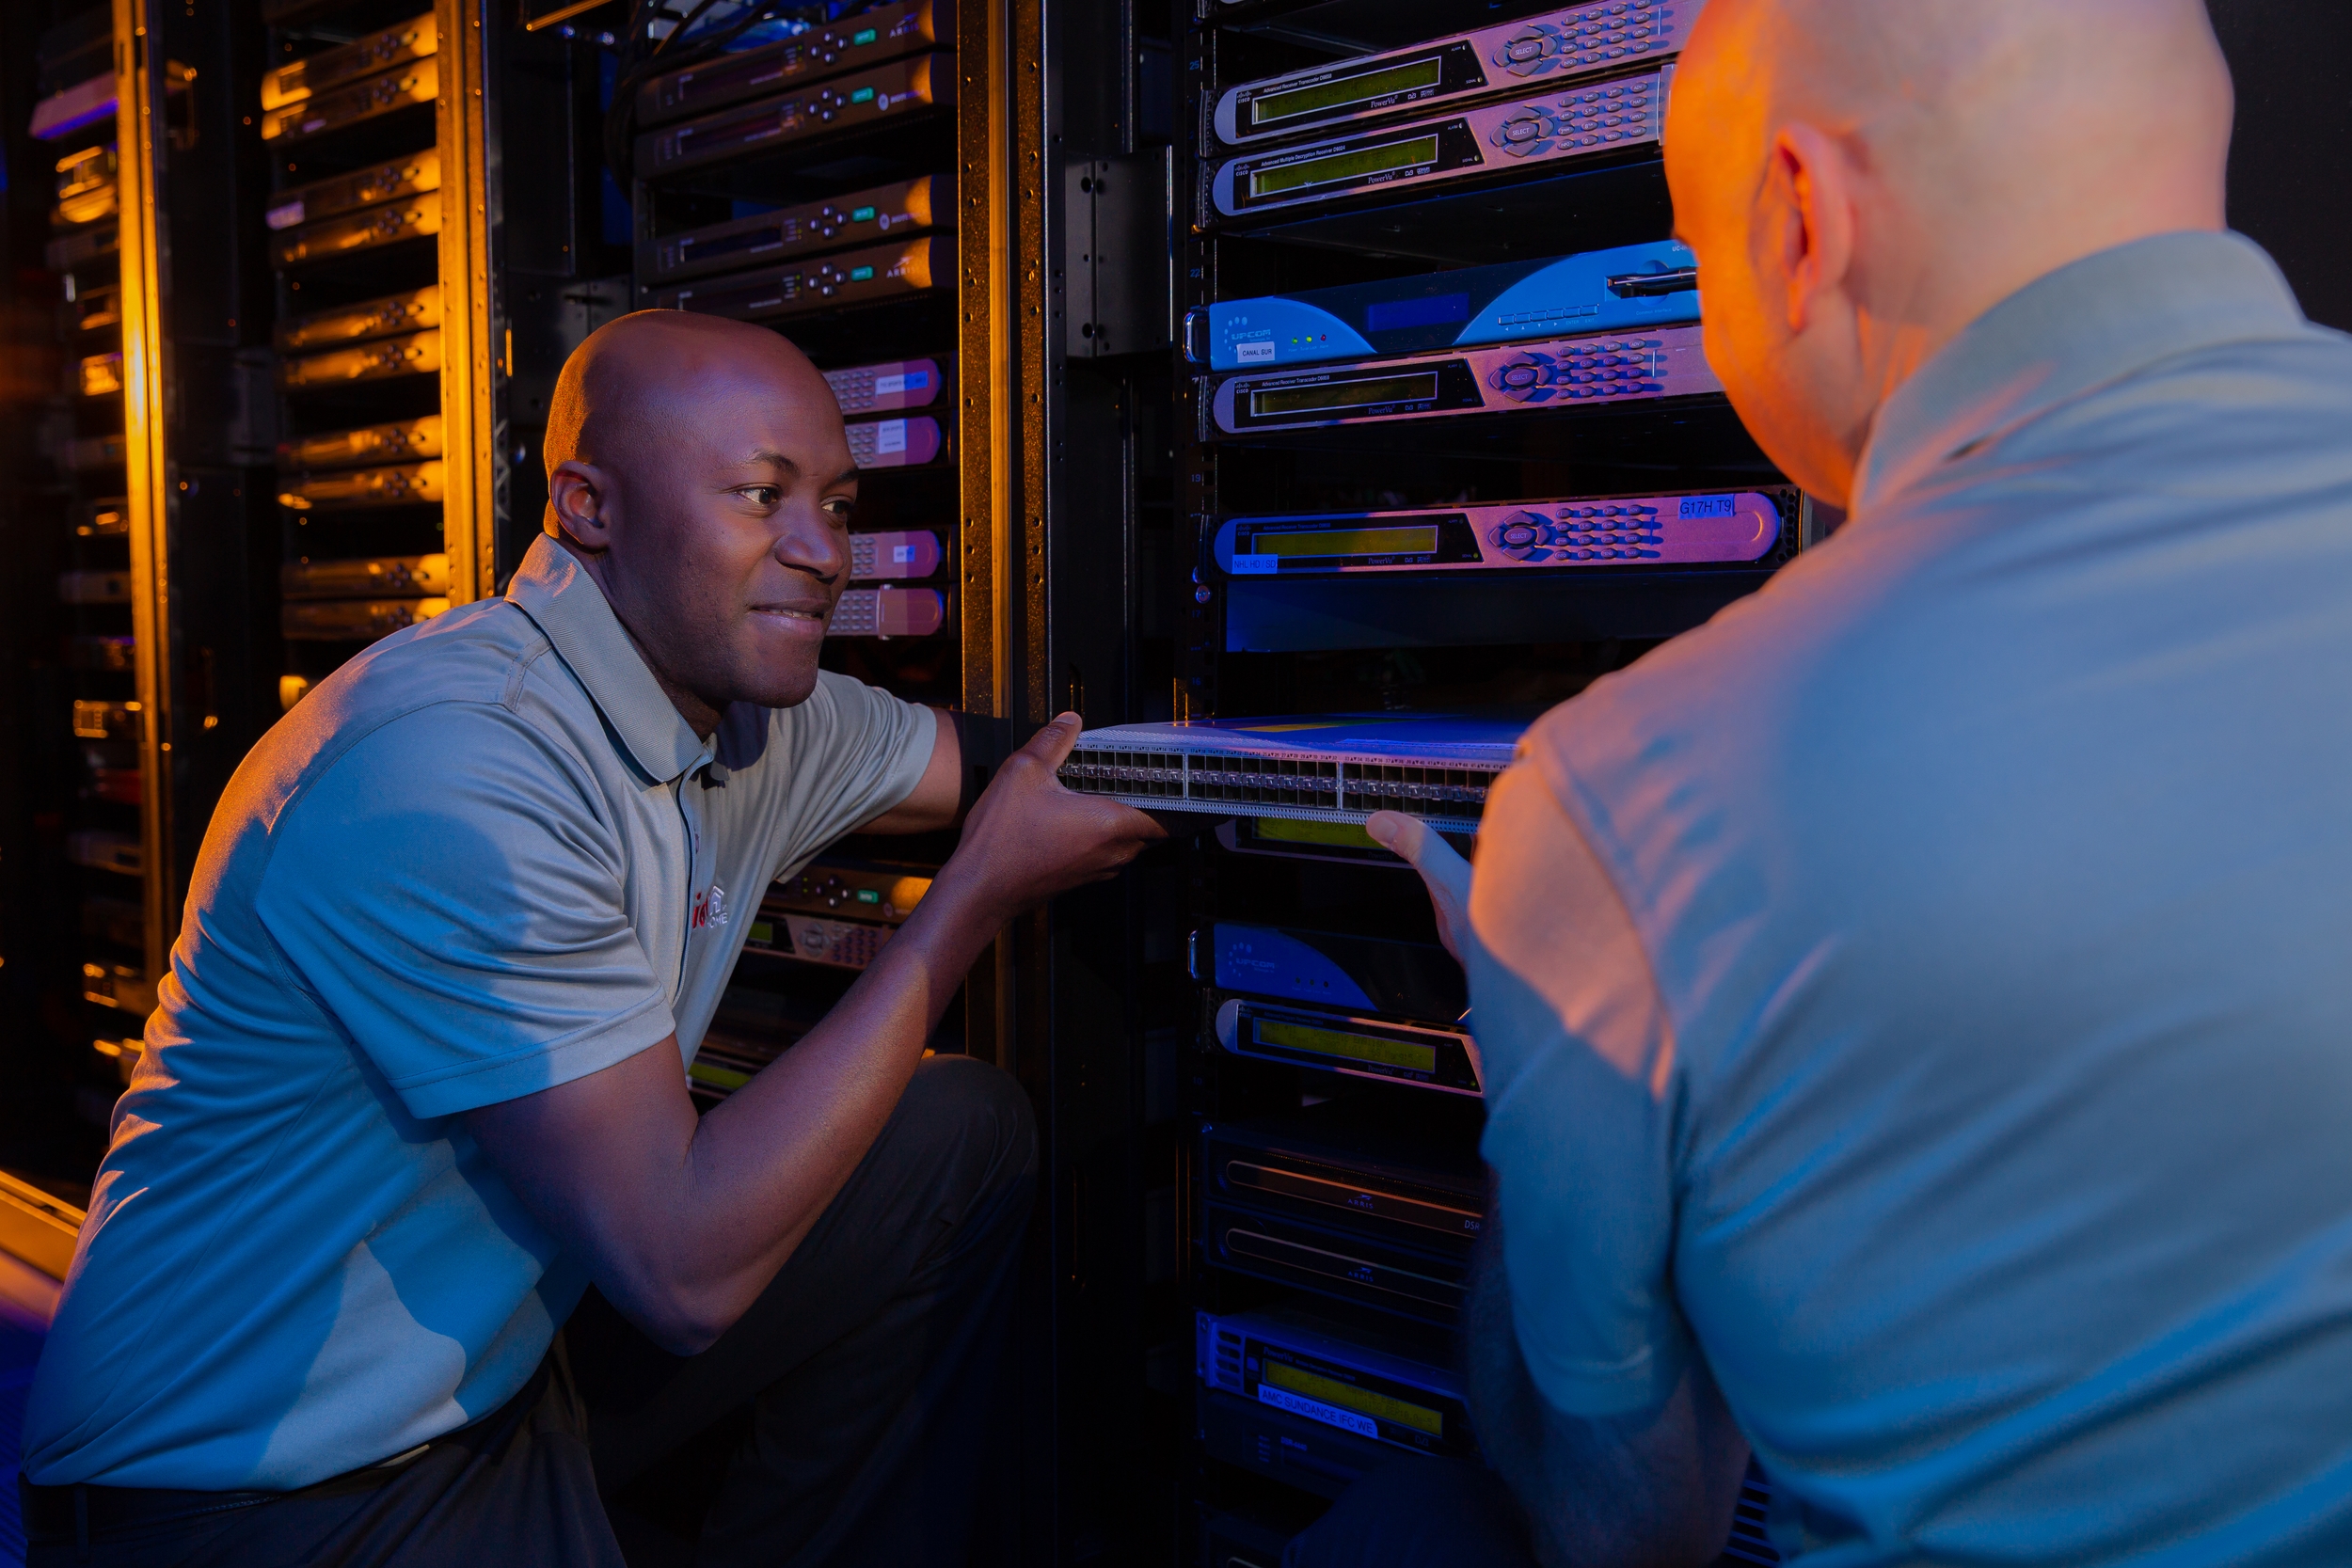 Two men work together to adjust part of a server system.